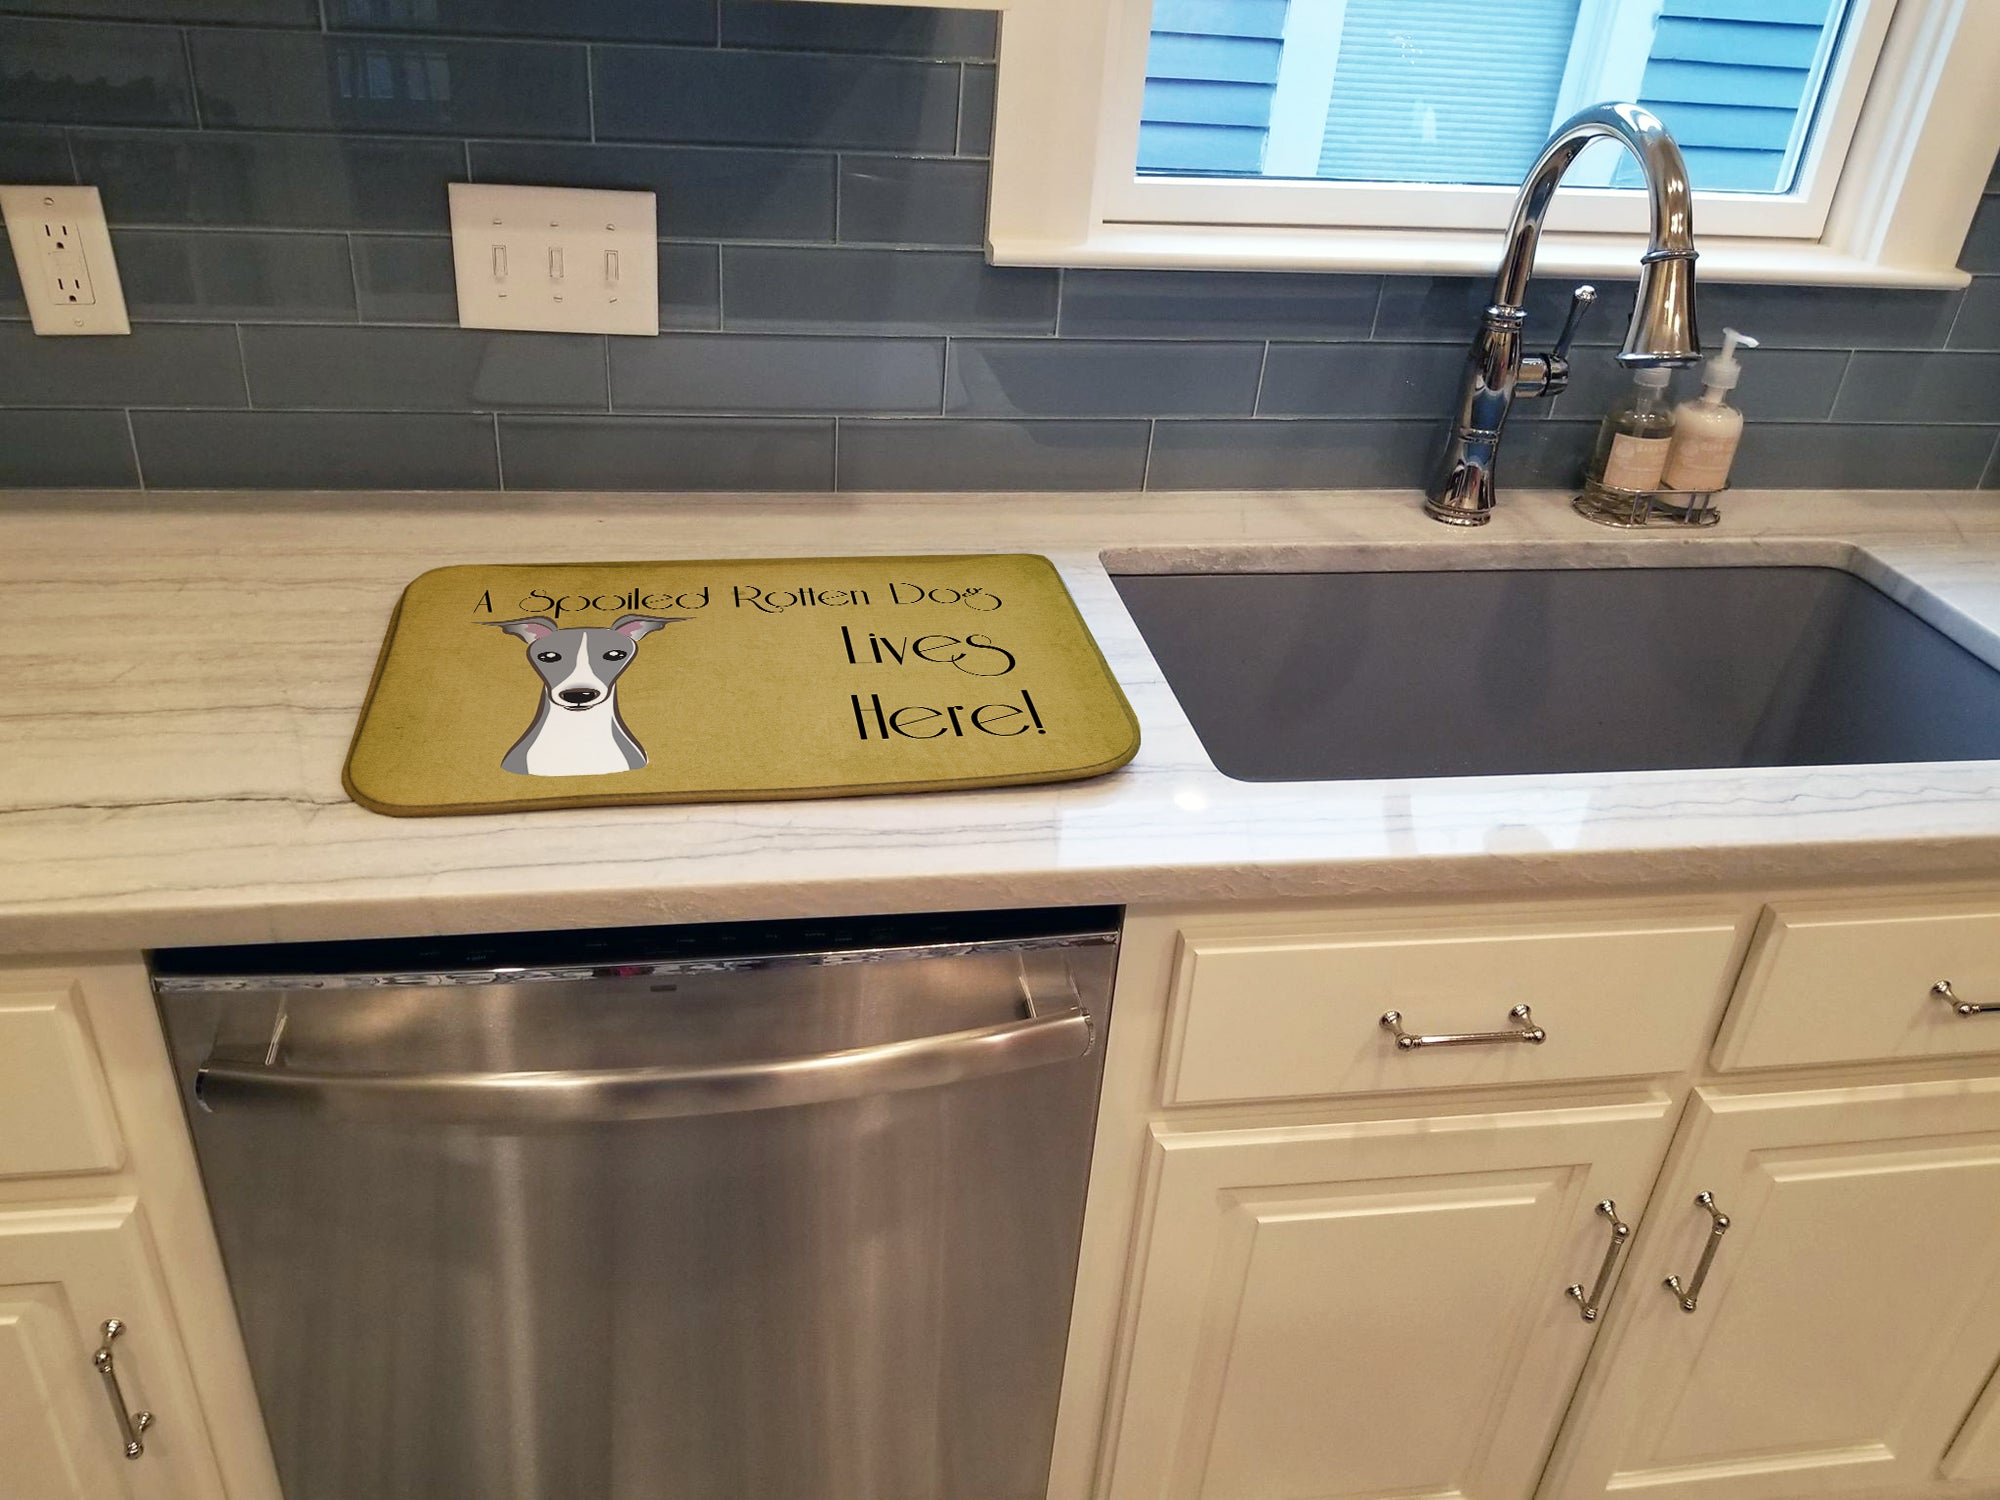 Italian Greyhound Spoiled Dog Lives Here Dish Drying Mat BB1484DDM